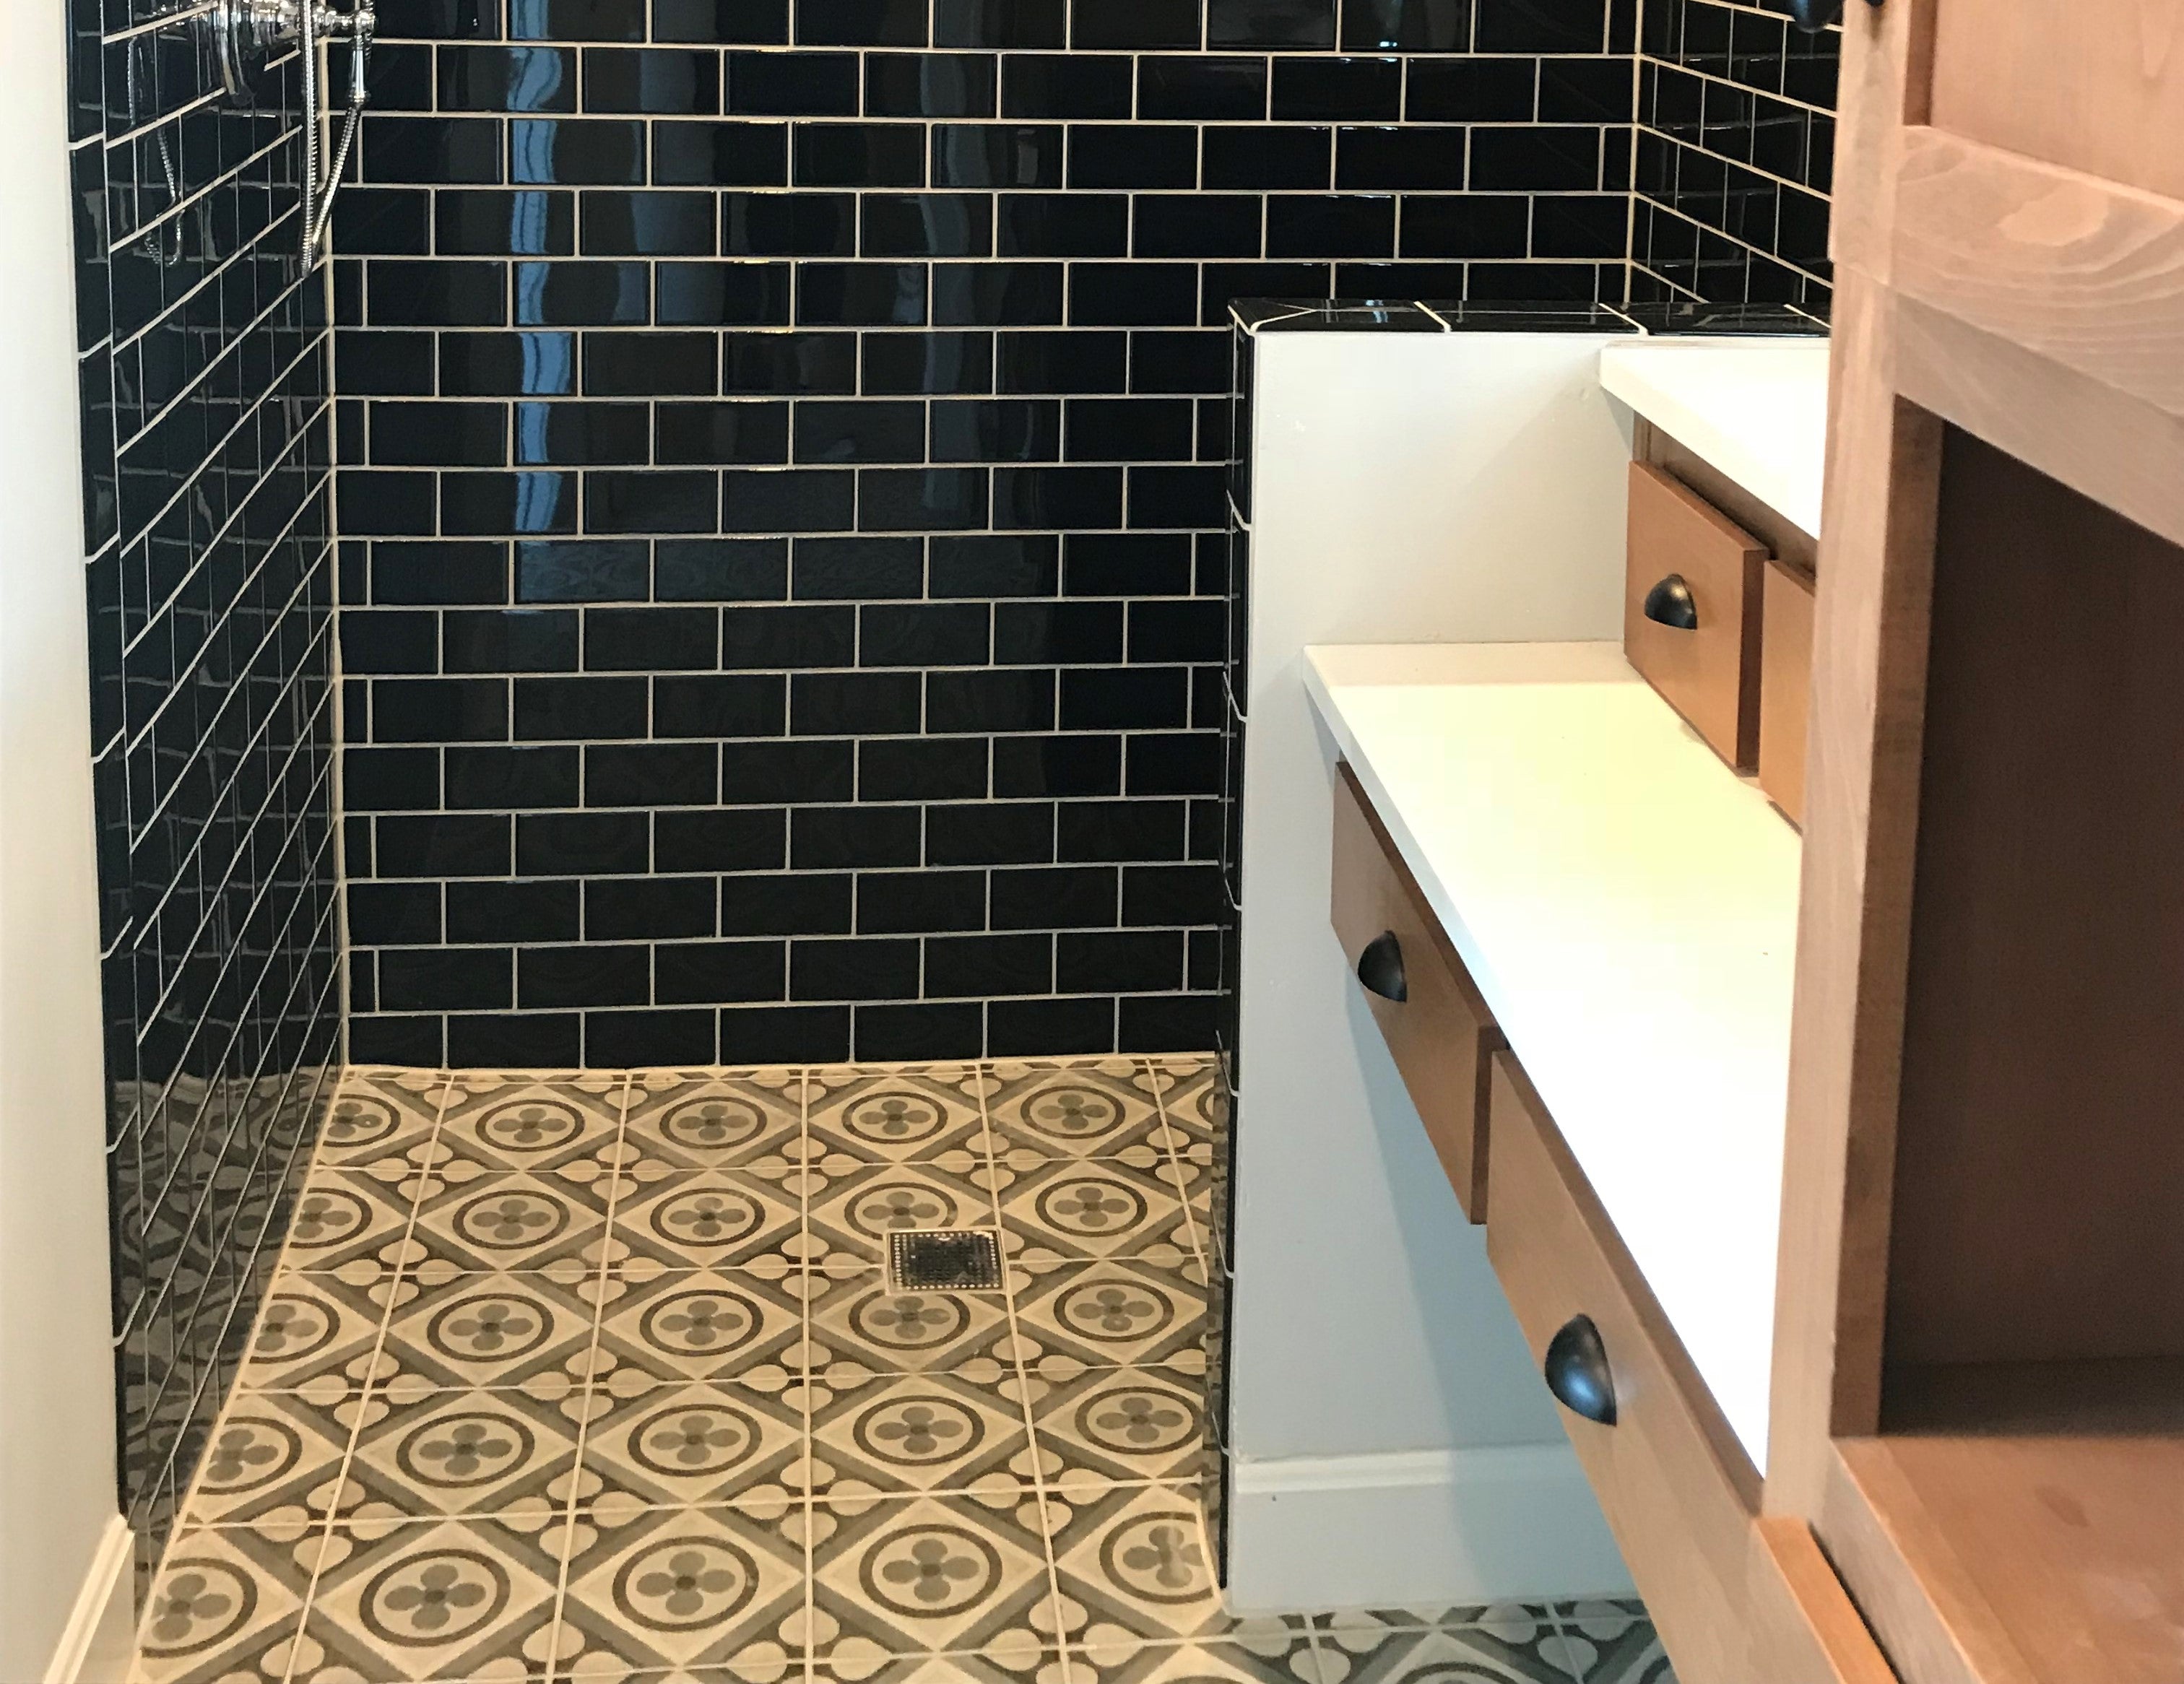 Black Subway Brick 2x4 Porcelain Wall Floor Tile Backsplash Shiny for Kitchen, Bathroom Shower, Accent Decor, Fireplace on 12x12 Mesh for Easy Installation